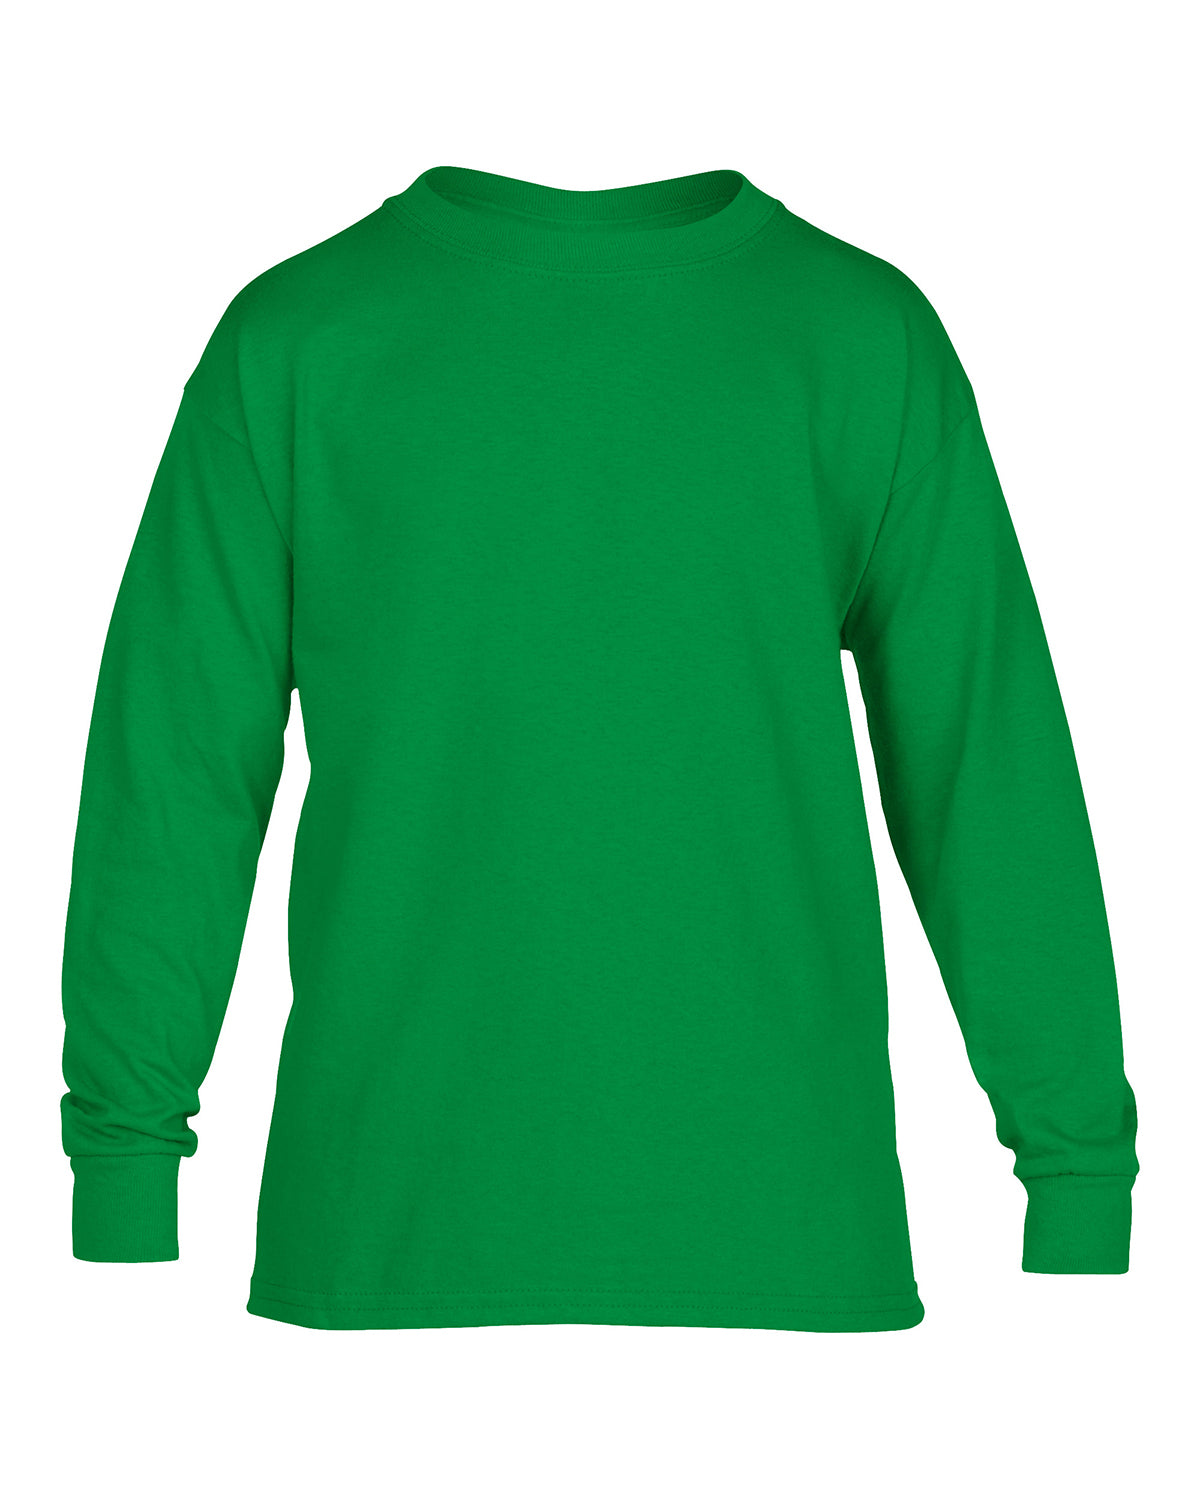 Youth Long Sleeve Basic Gildan T-Shirt G540b